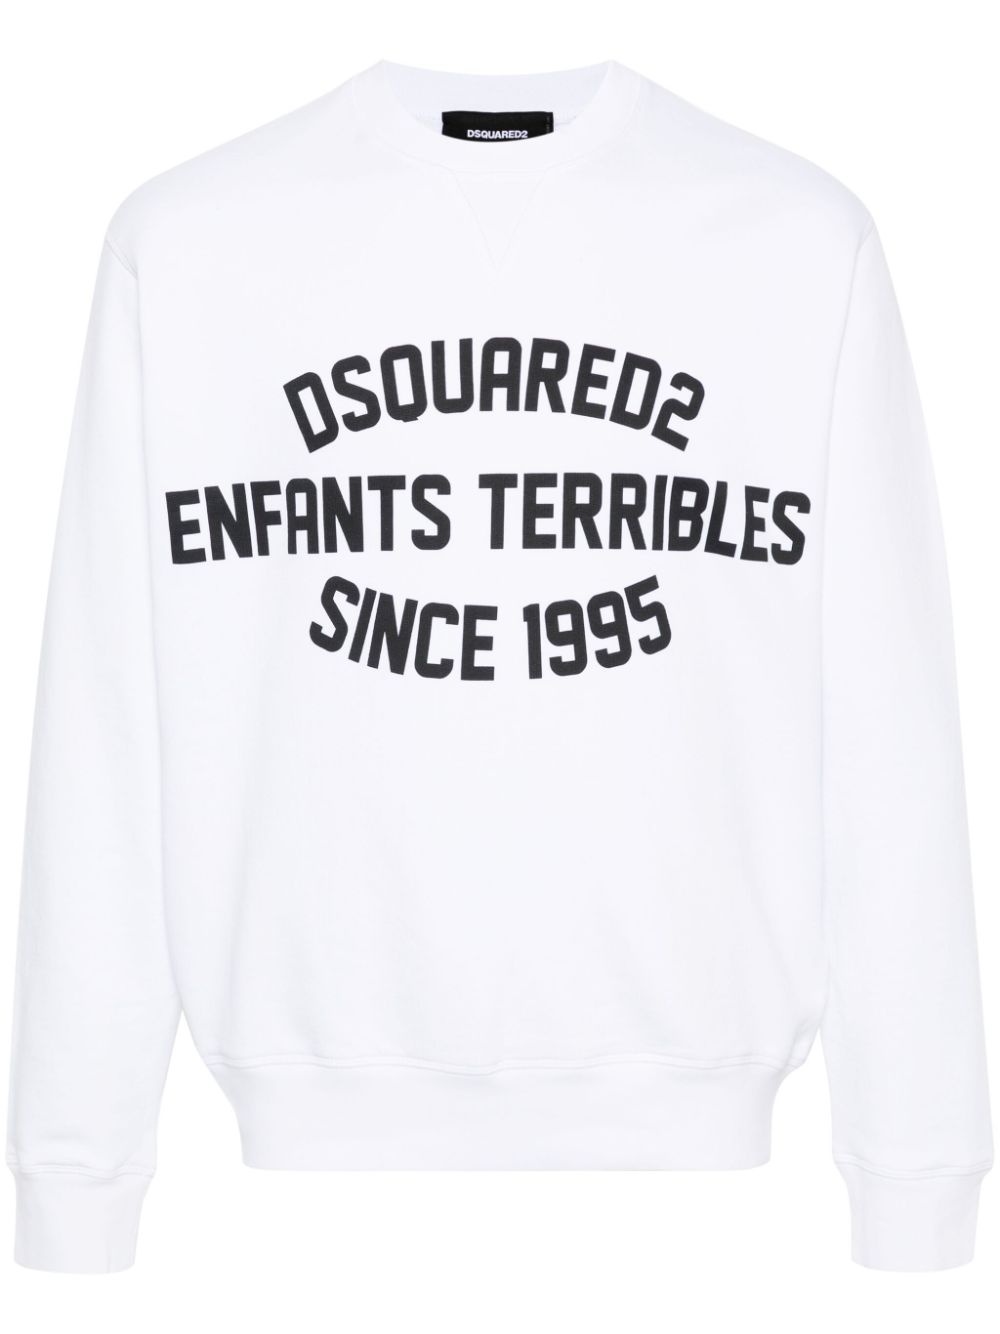 Enfants Terribles cotton sweatshirt - 1